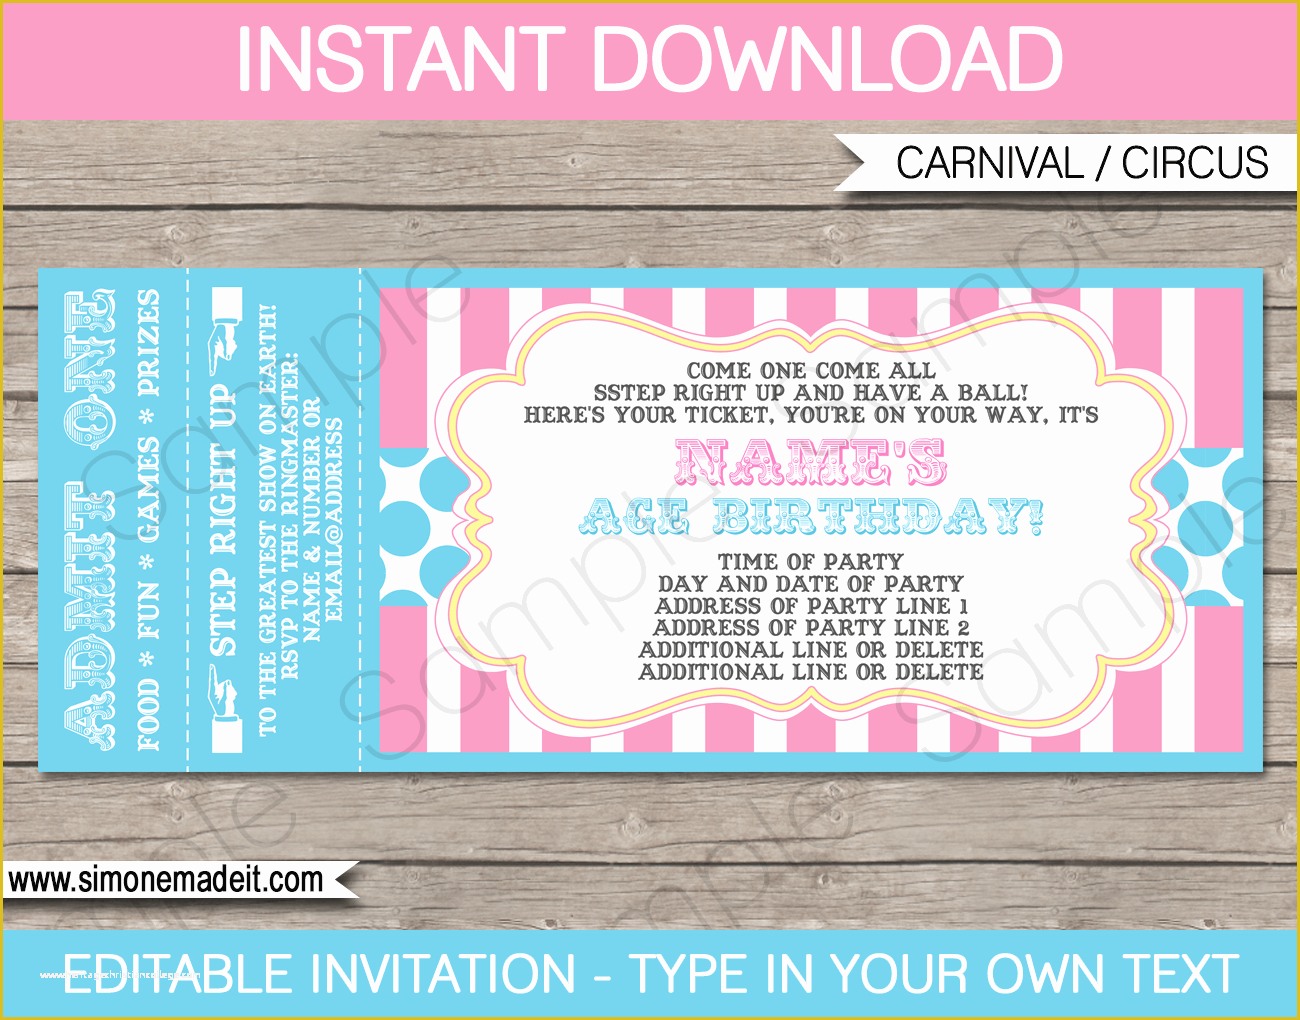 Ticket Invitation Template Free Of Carnival Party Ticket Invitations Template